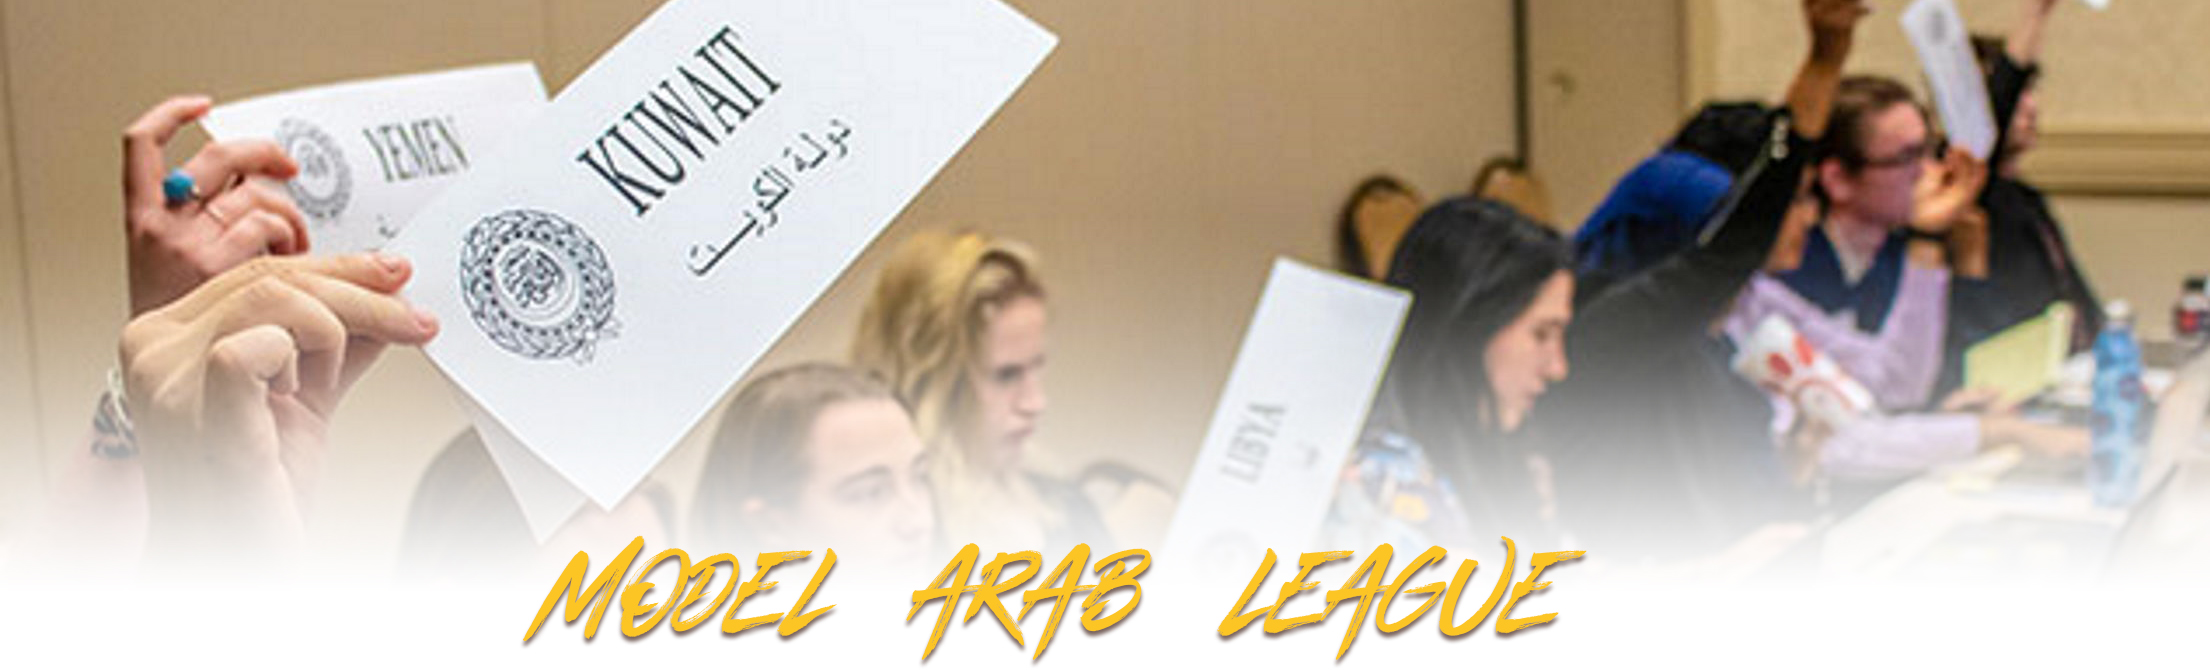 model arab league university of wyoming